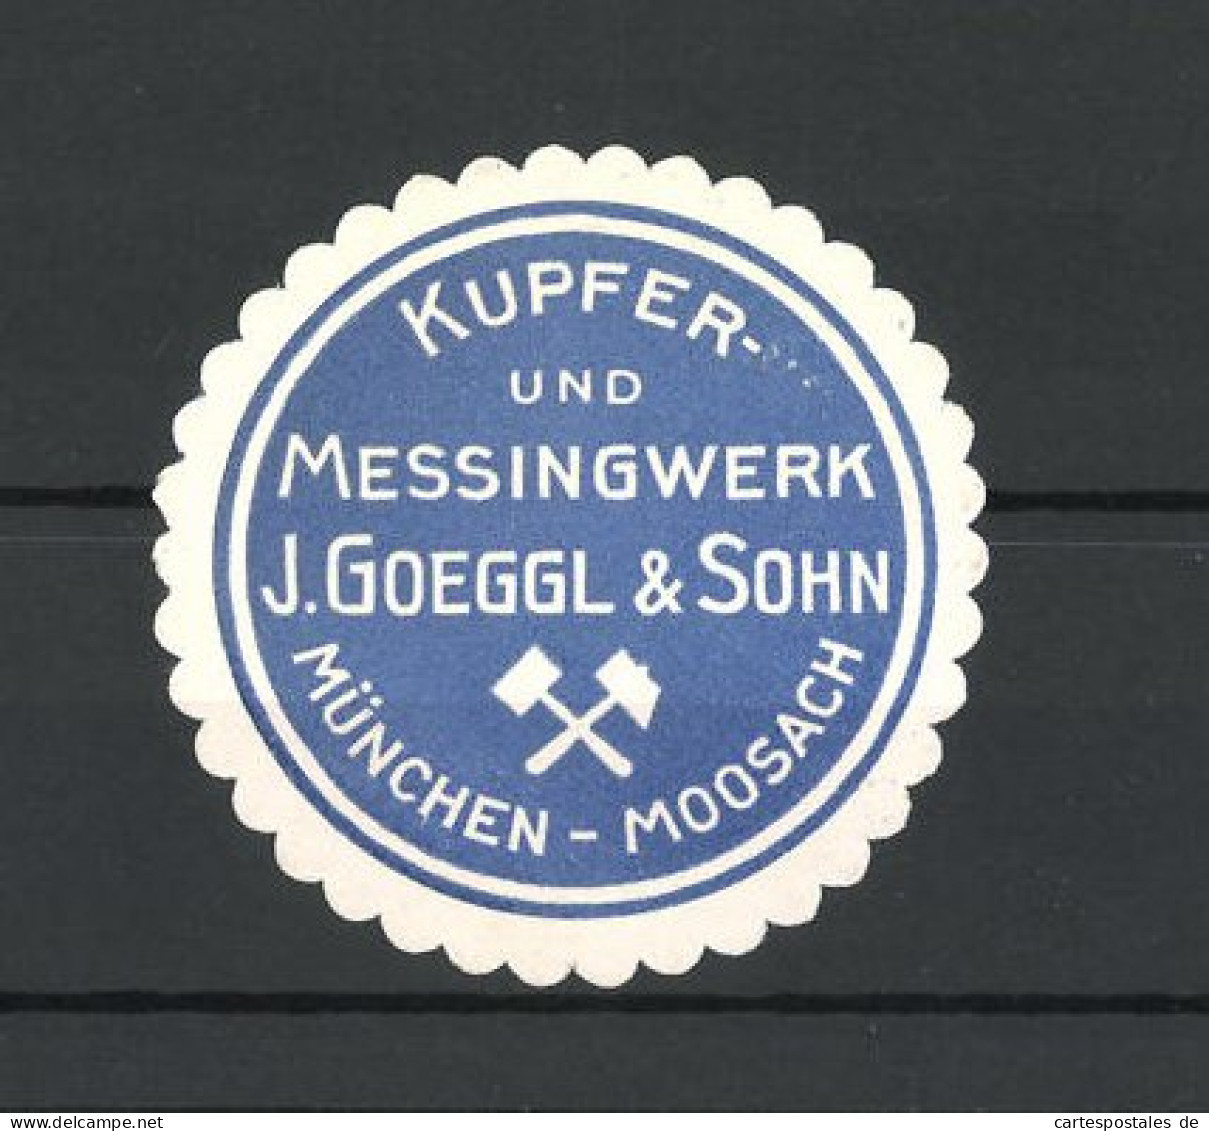 Reklamemarke Kupfer- Und Messingwerk J. Goeggl & Sohn, München-Moosach  - Cinderellas